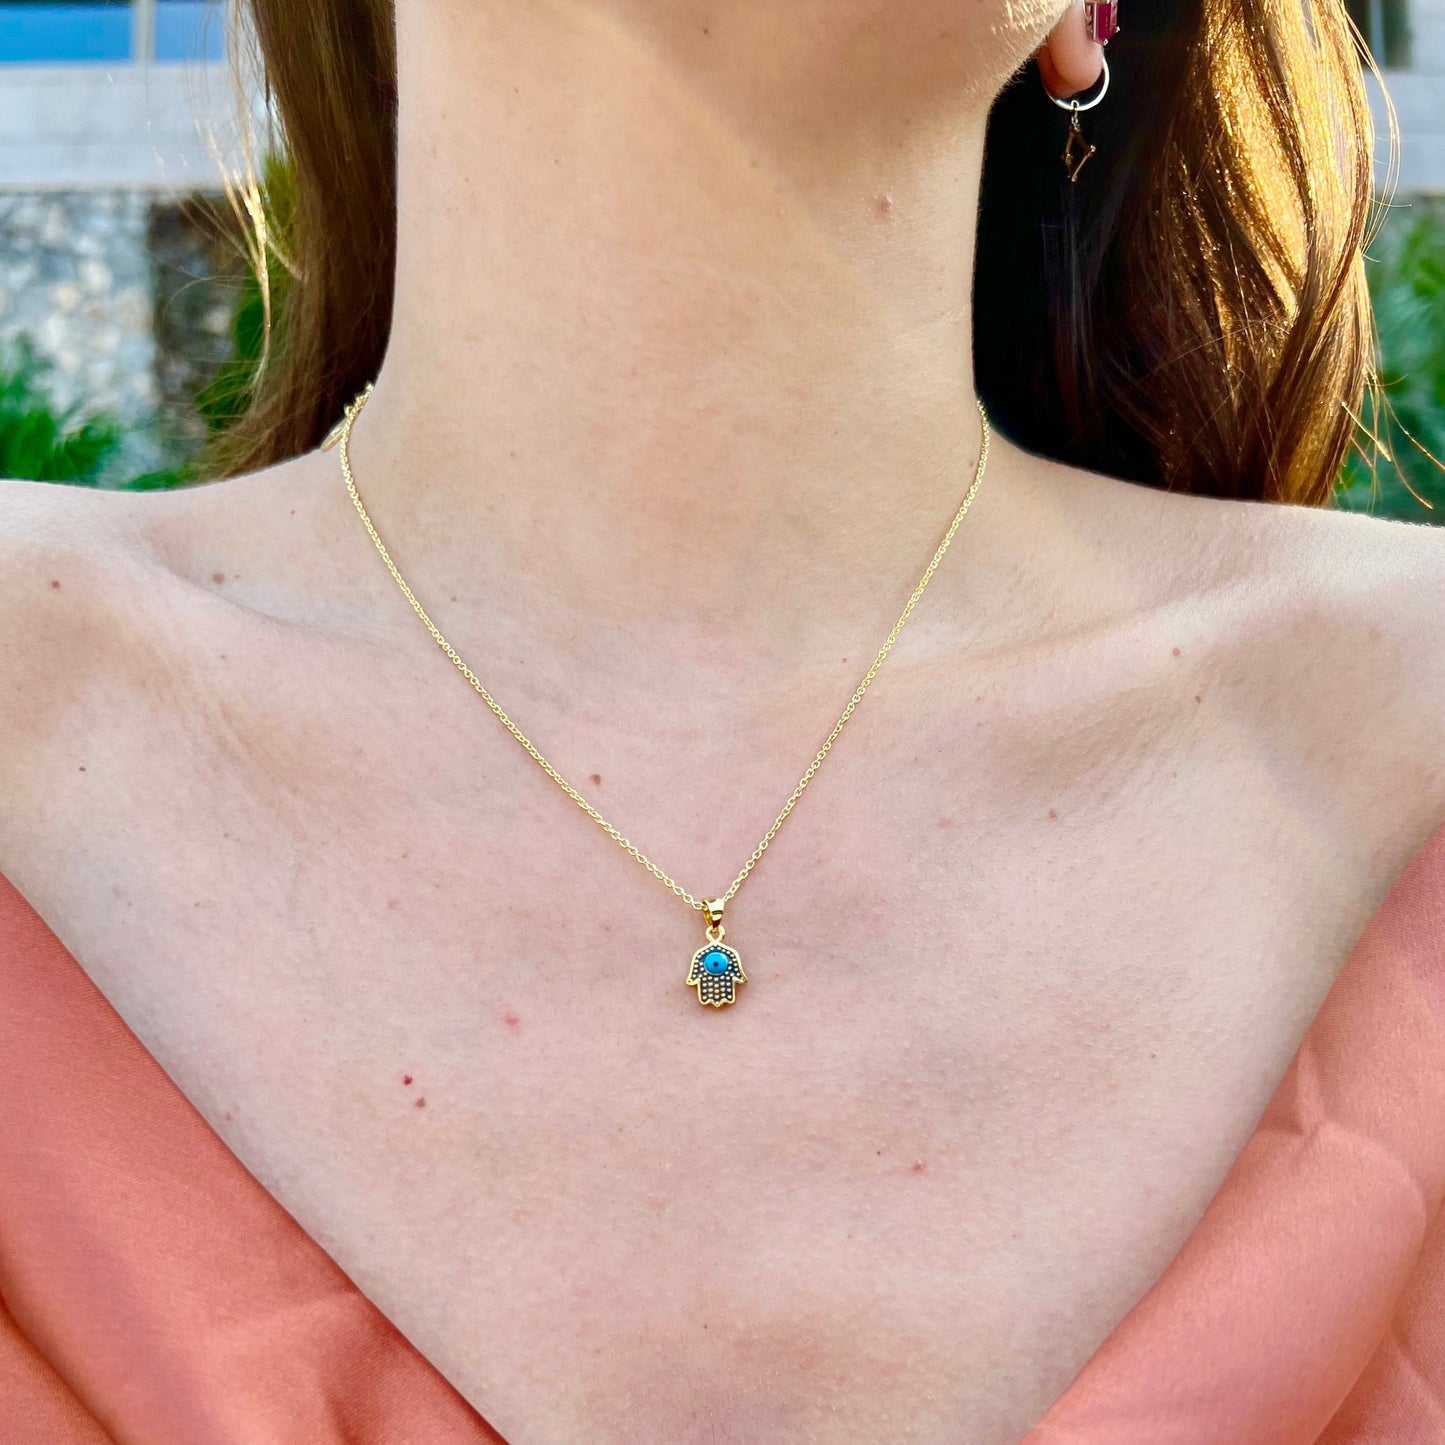 Gold Hamsa necklace with blue gem